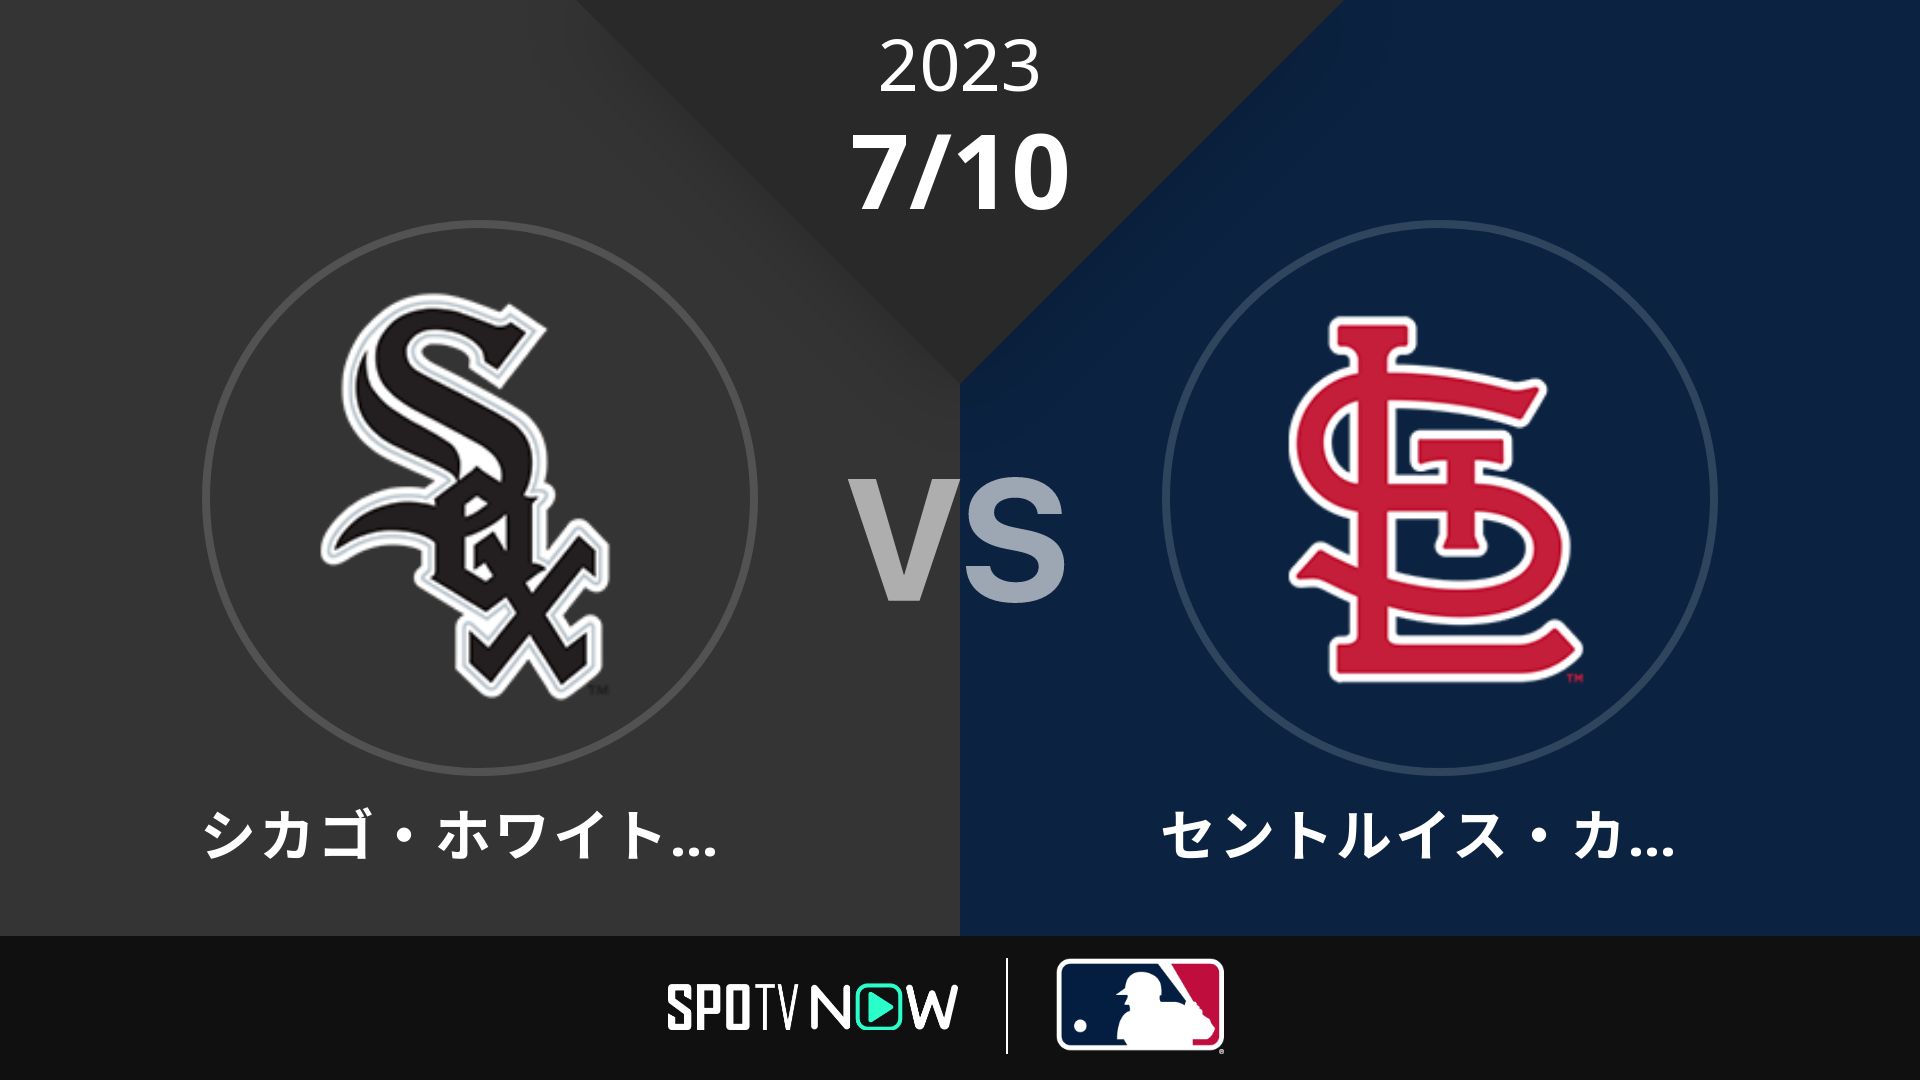 2023/7/10 Wソックス vs カージナルス [MLB]